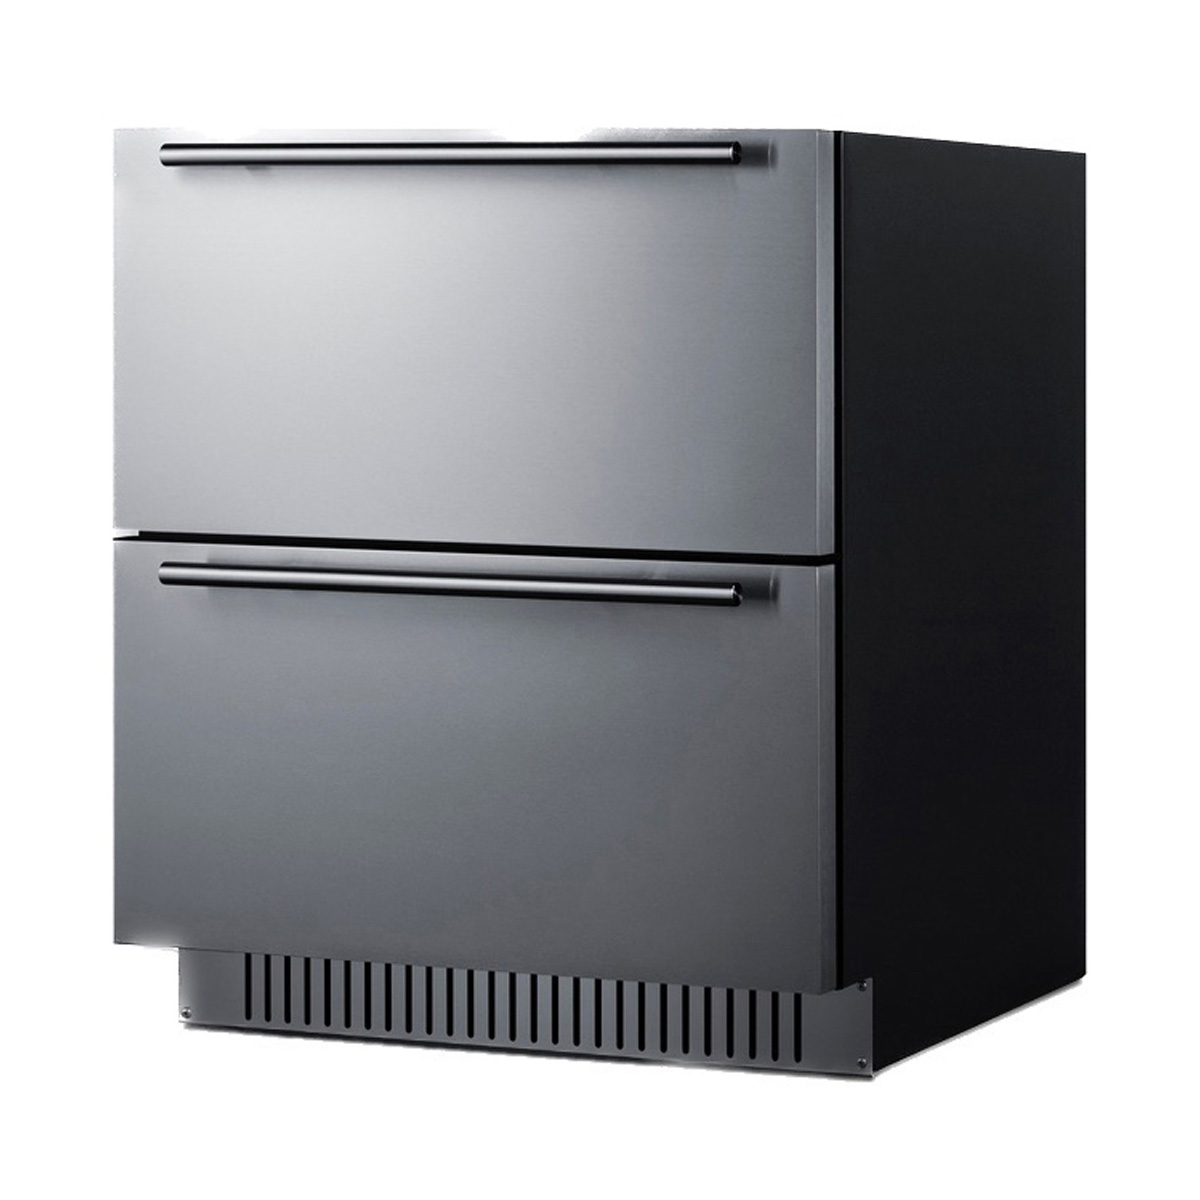 Summit SPR275OS2D 27 in. Wide 2-Drawer All-refrigerator